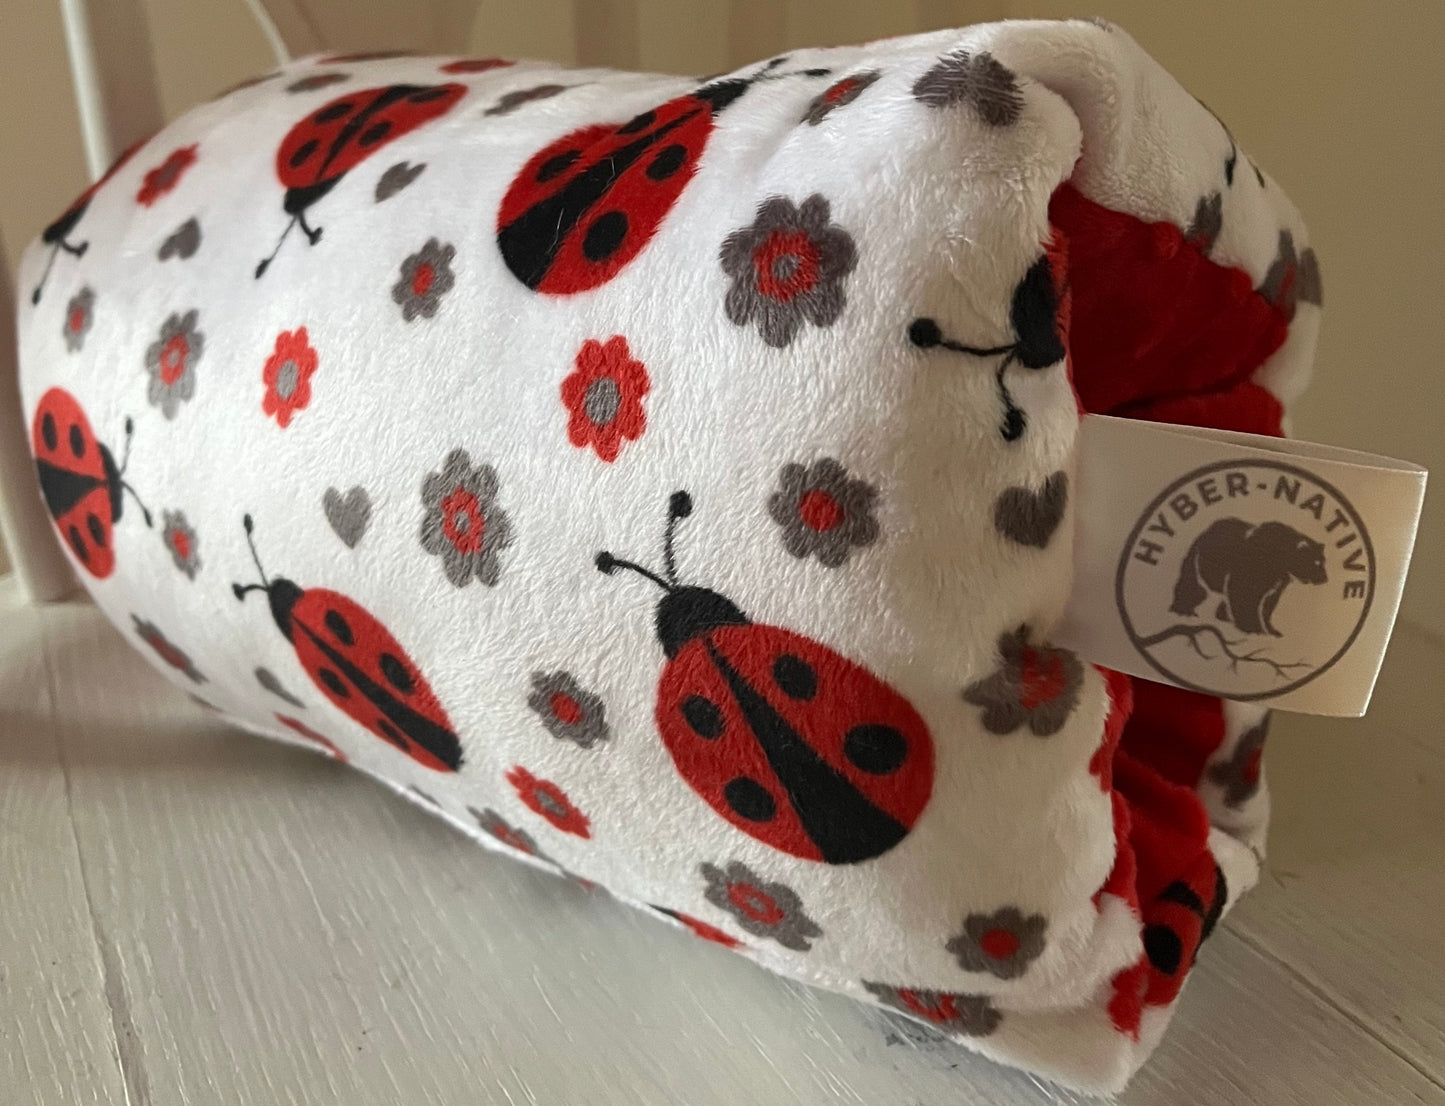 Hyber-Native Lovebug Nursing Pillow